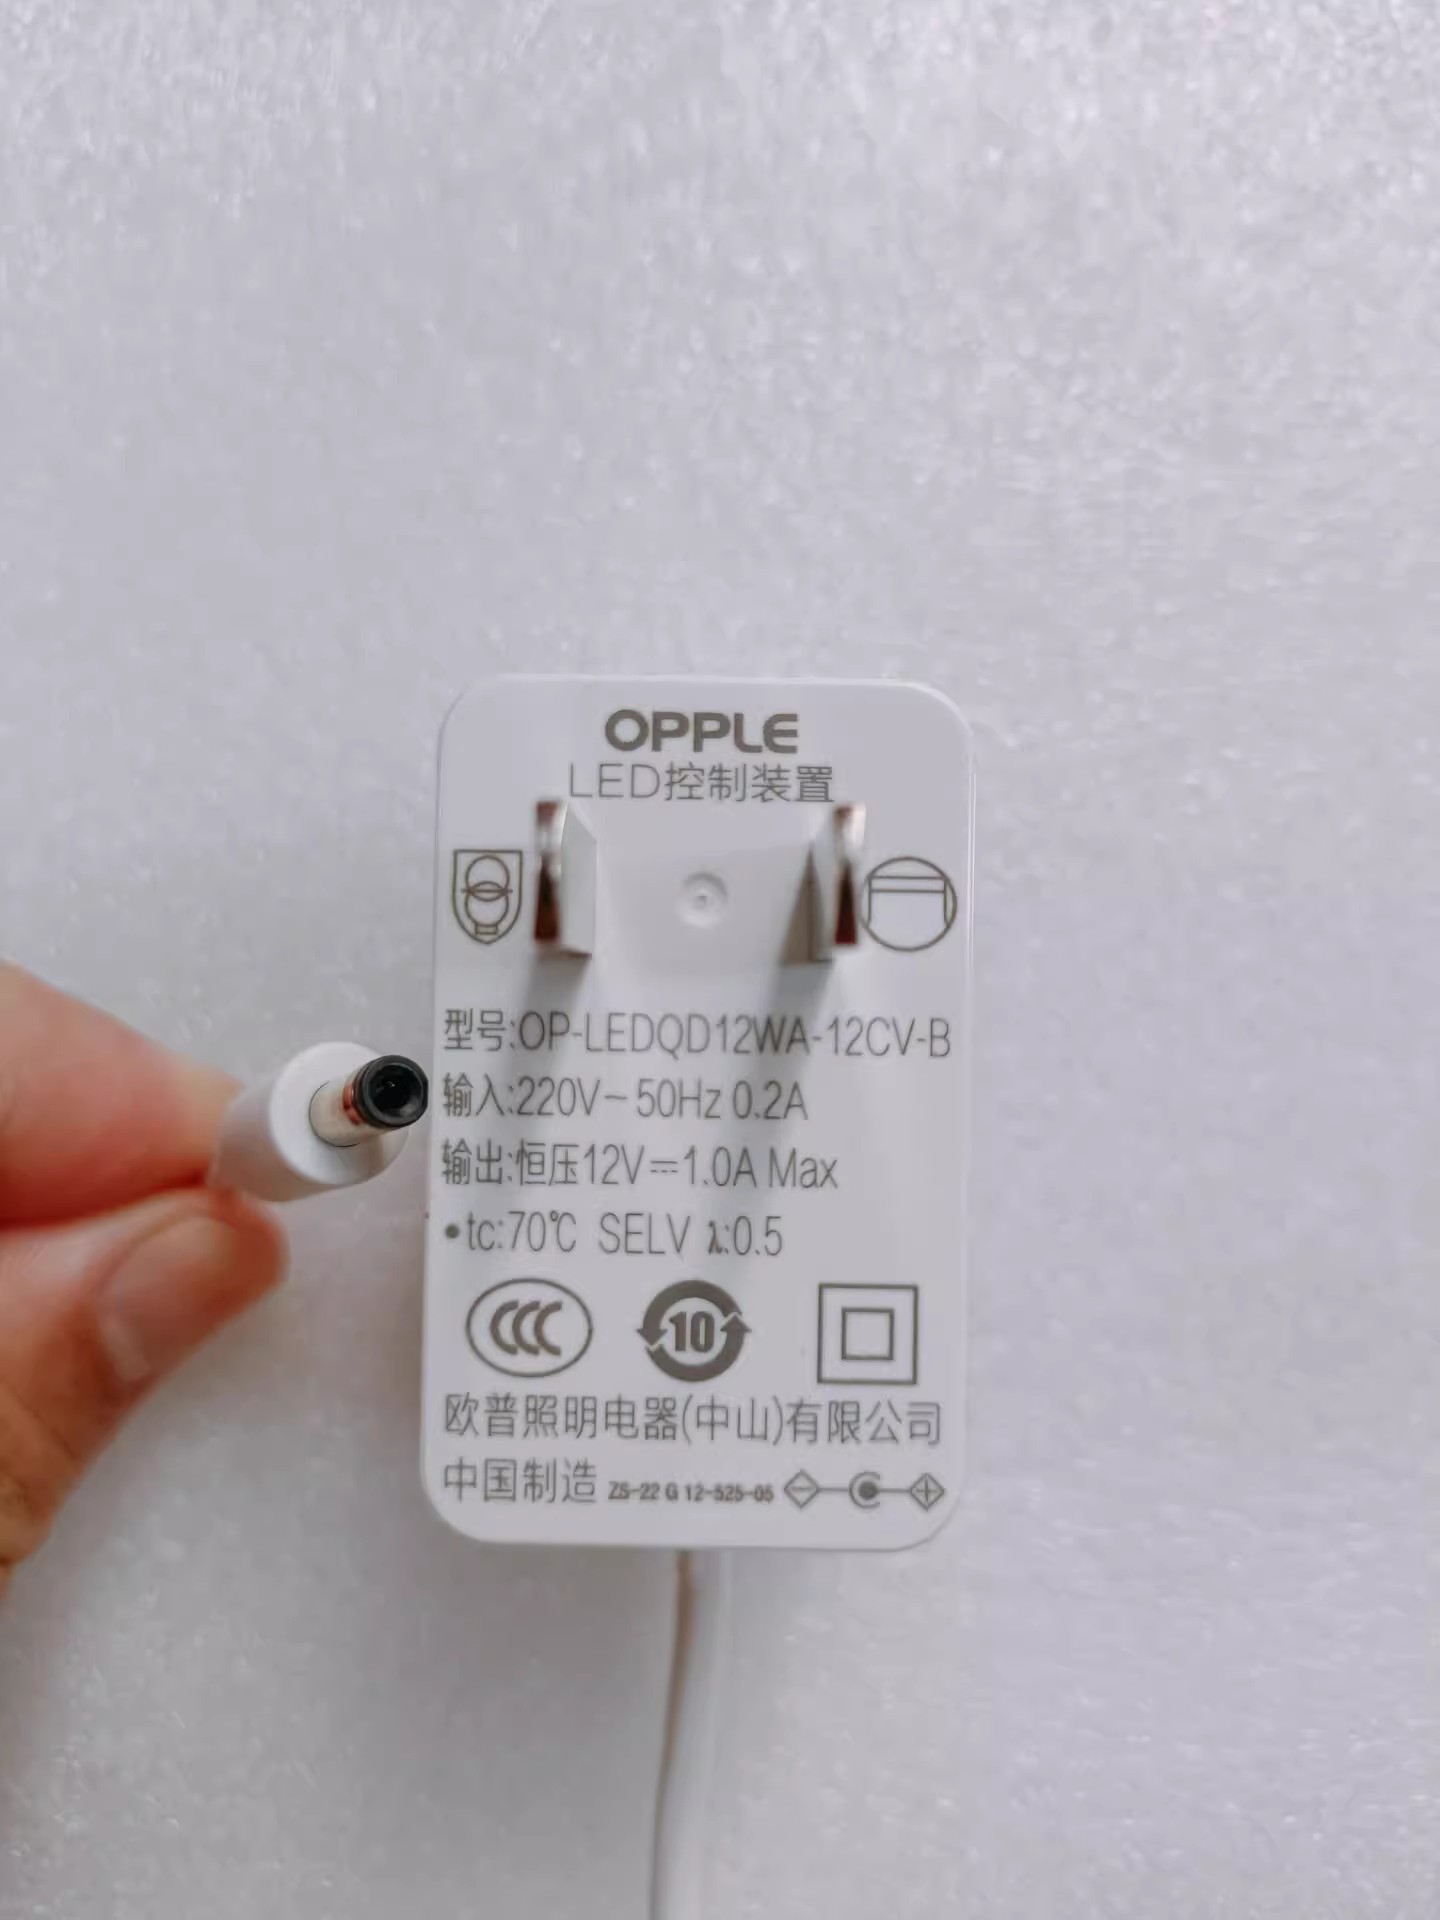 *Brand NEW* OPPLE 12V 1A LED AC DC ADAPTHE OP-LEDQD12WA-12CV-B POWER Supply